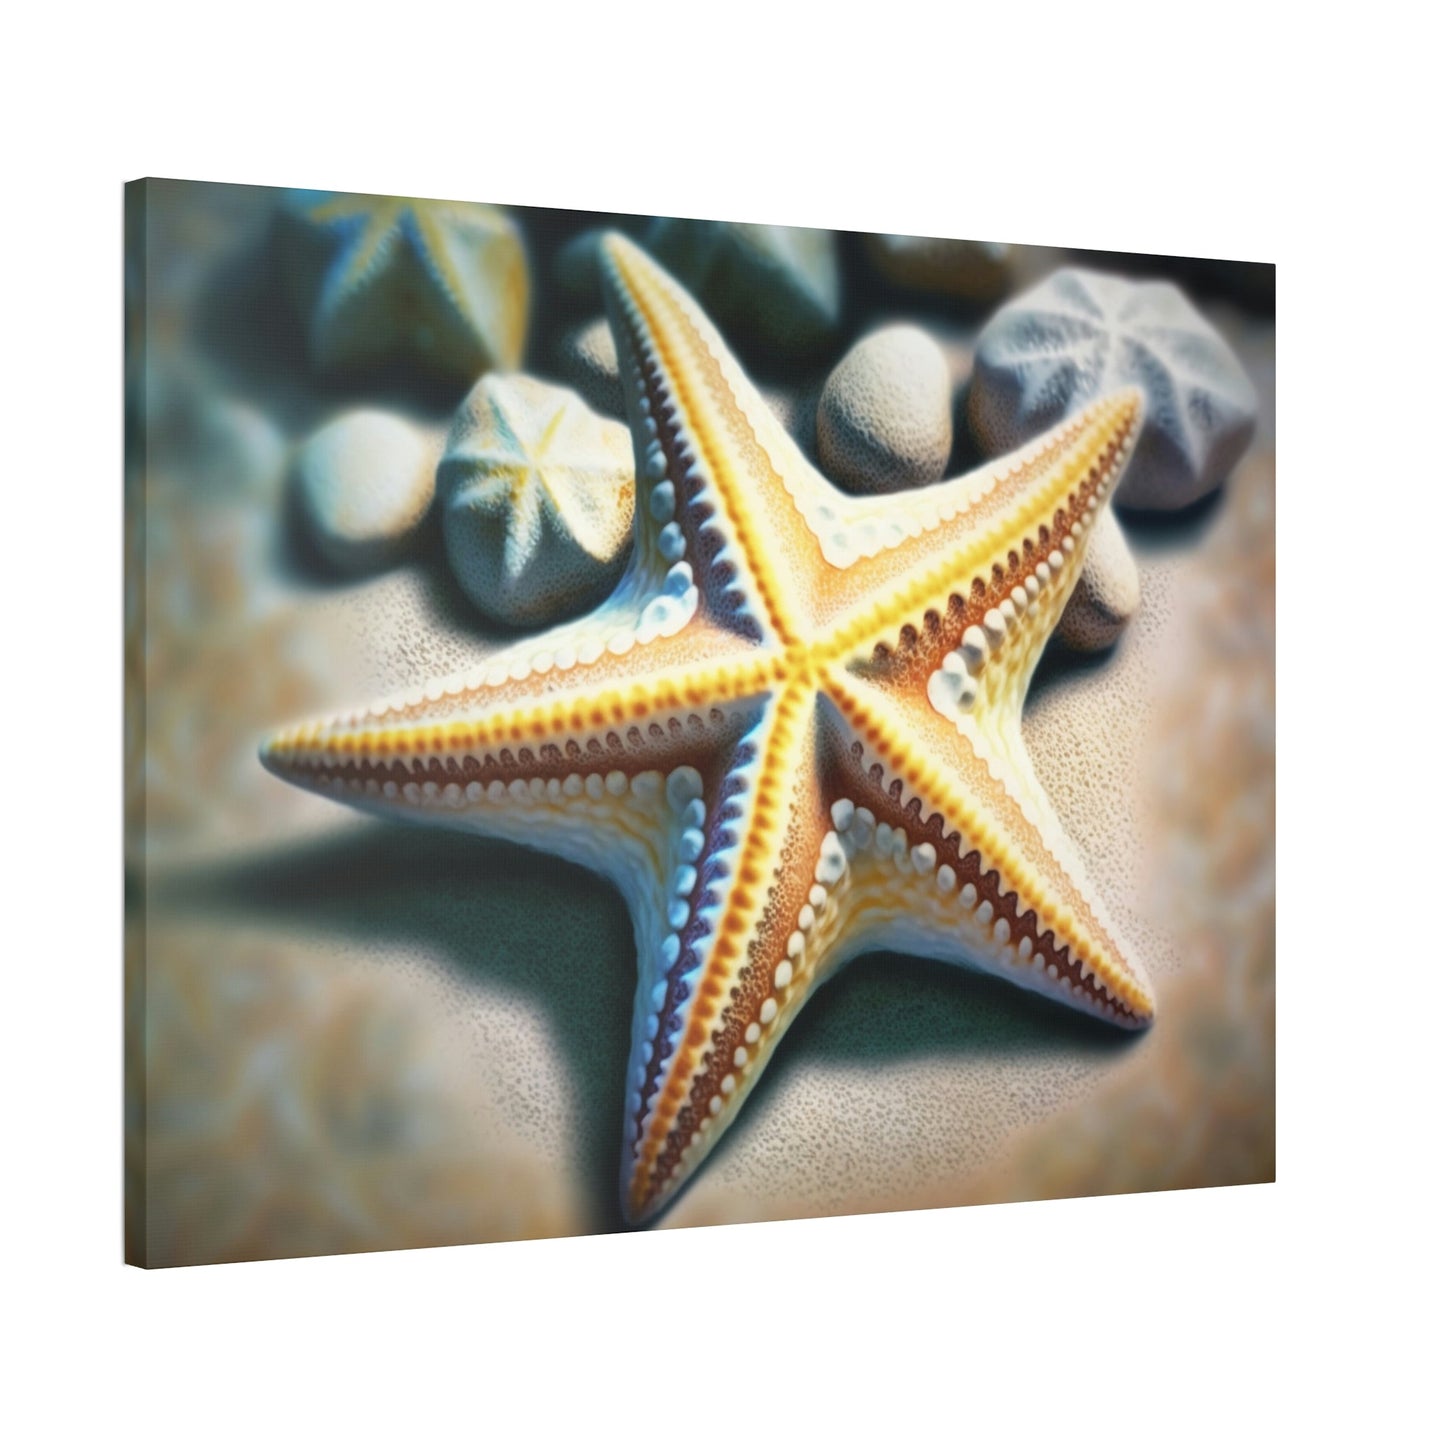 Dancing with Starfish: A Marine Fantasy